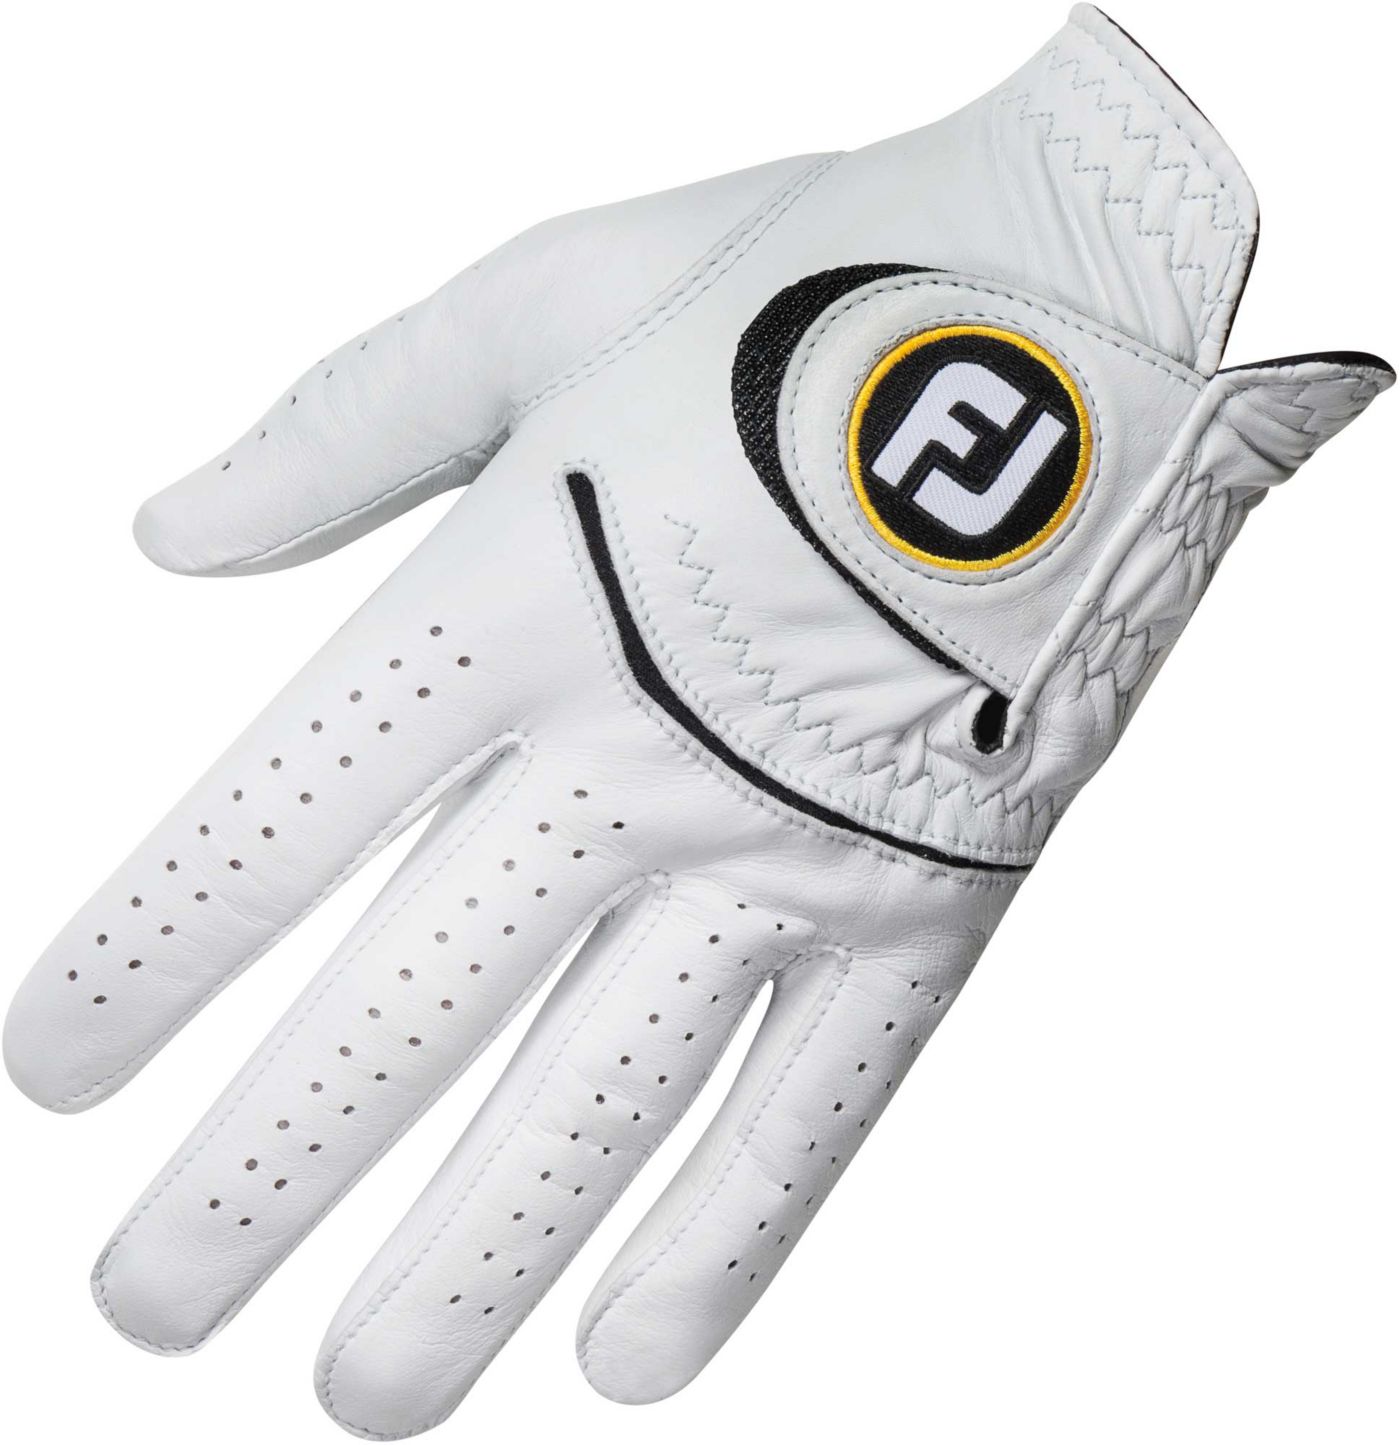 FootJoy StaSof Golf Glove DICK'S Sporting Goods